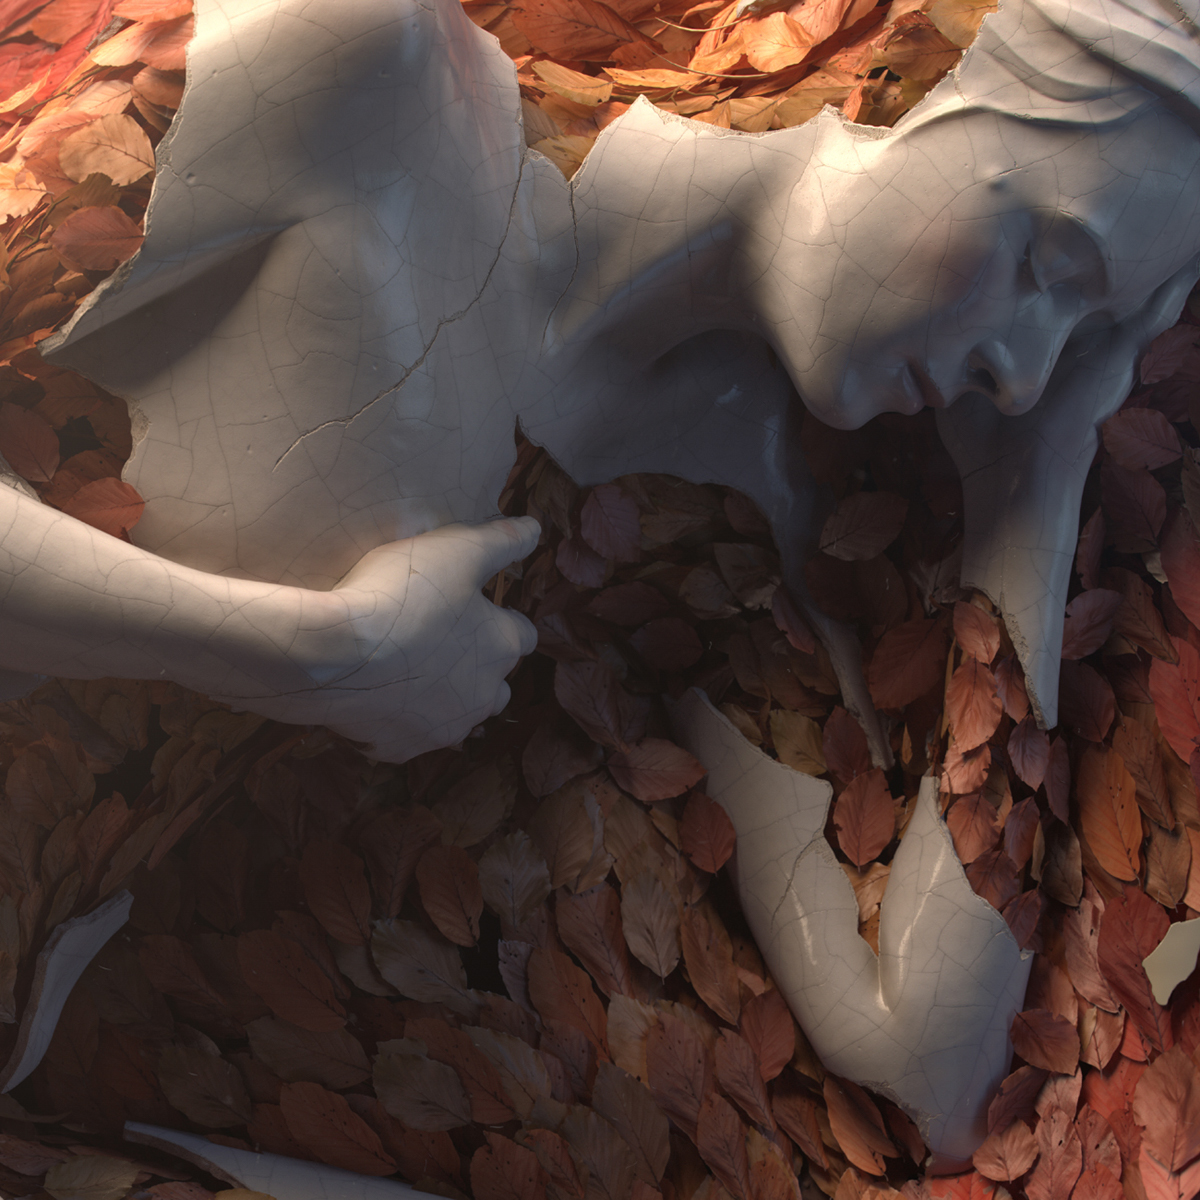 flower figures sculpture ceramic naked asleep shatter Fall leaves dry dead